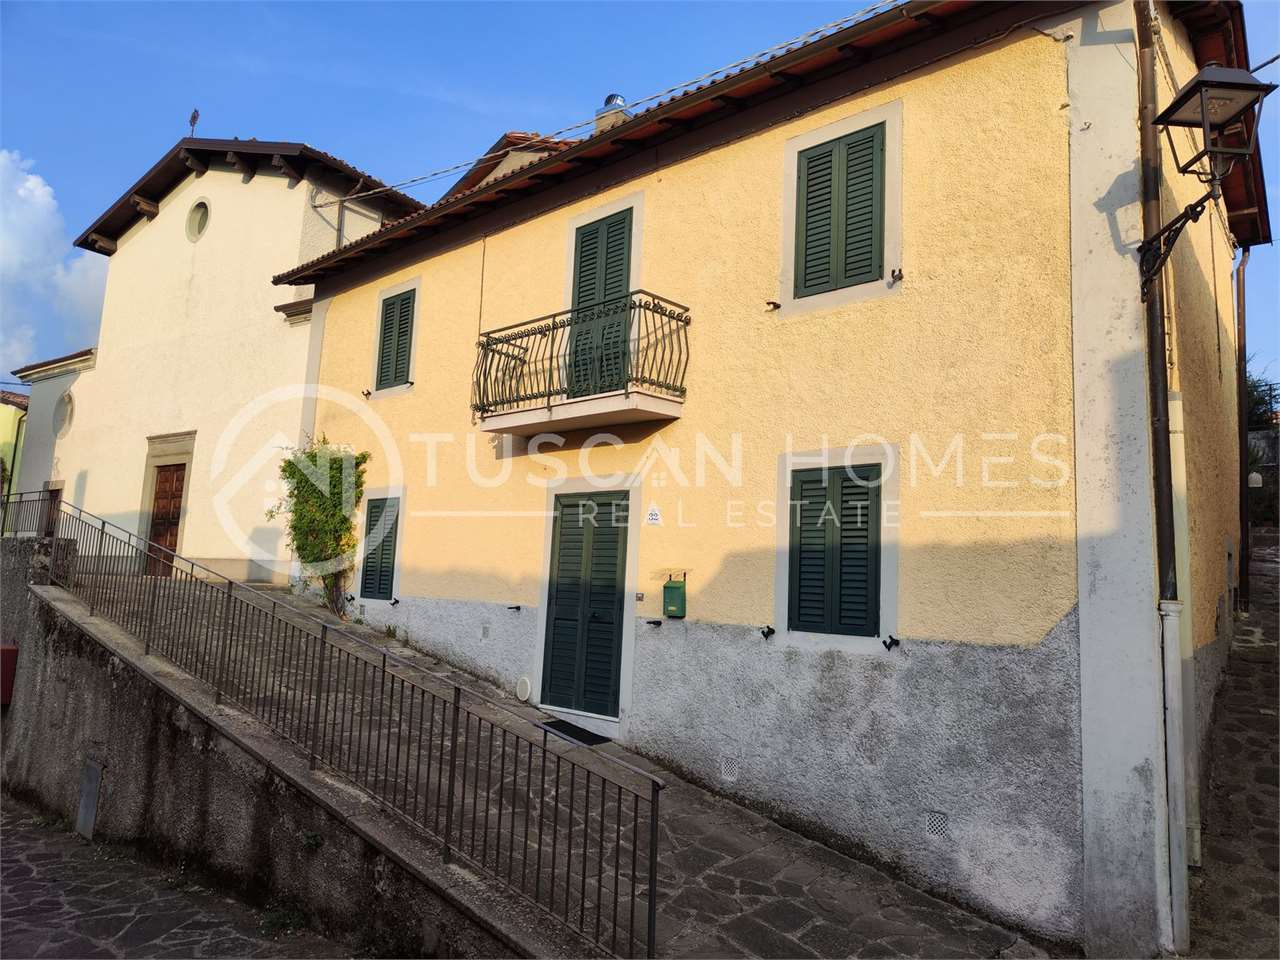 for-sale-barga-property-tuscany